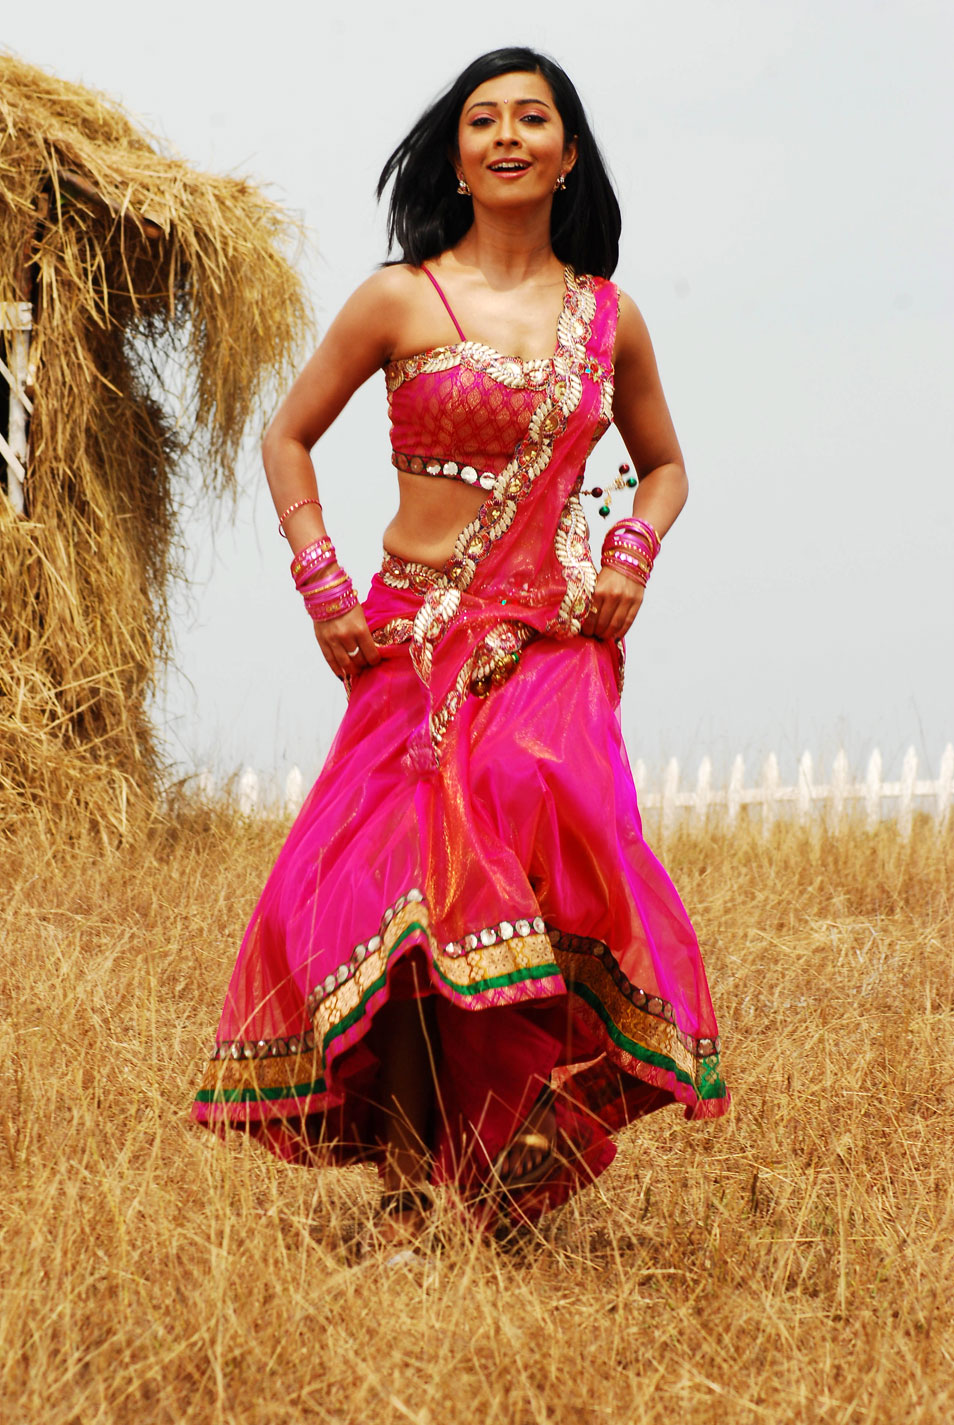 Radhika Pandit Bf Sex Video - Radhika Pandit s POSES Stunning and Beautiful, Have a Glance